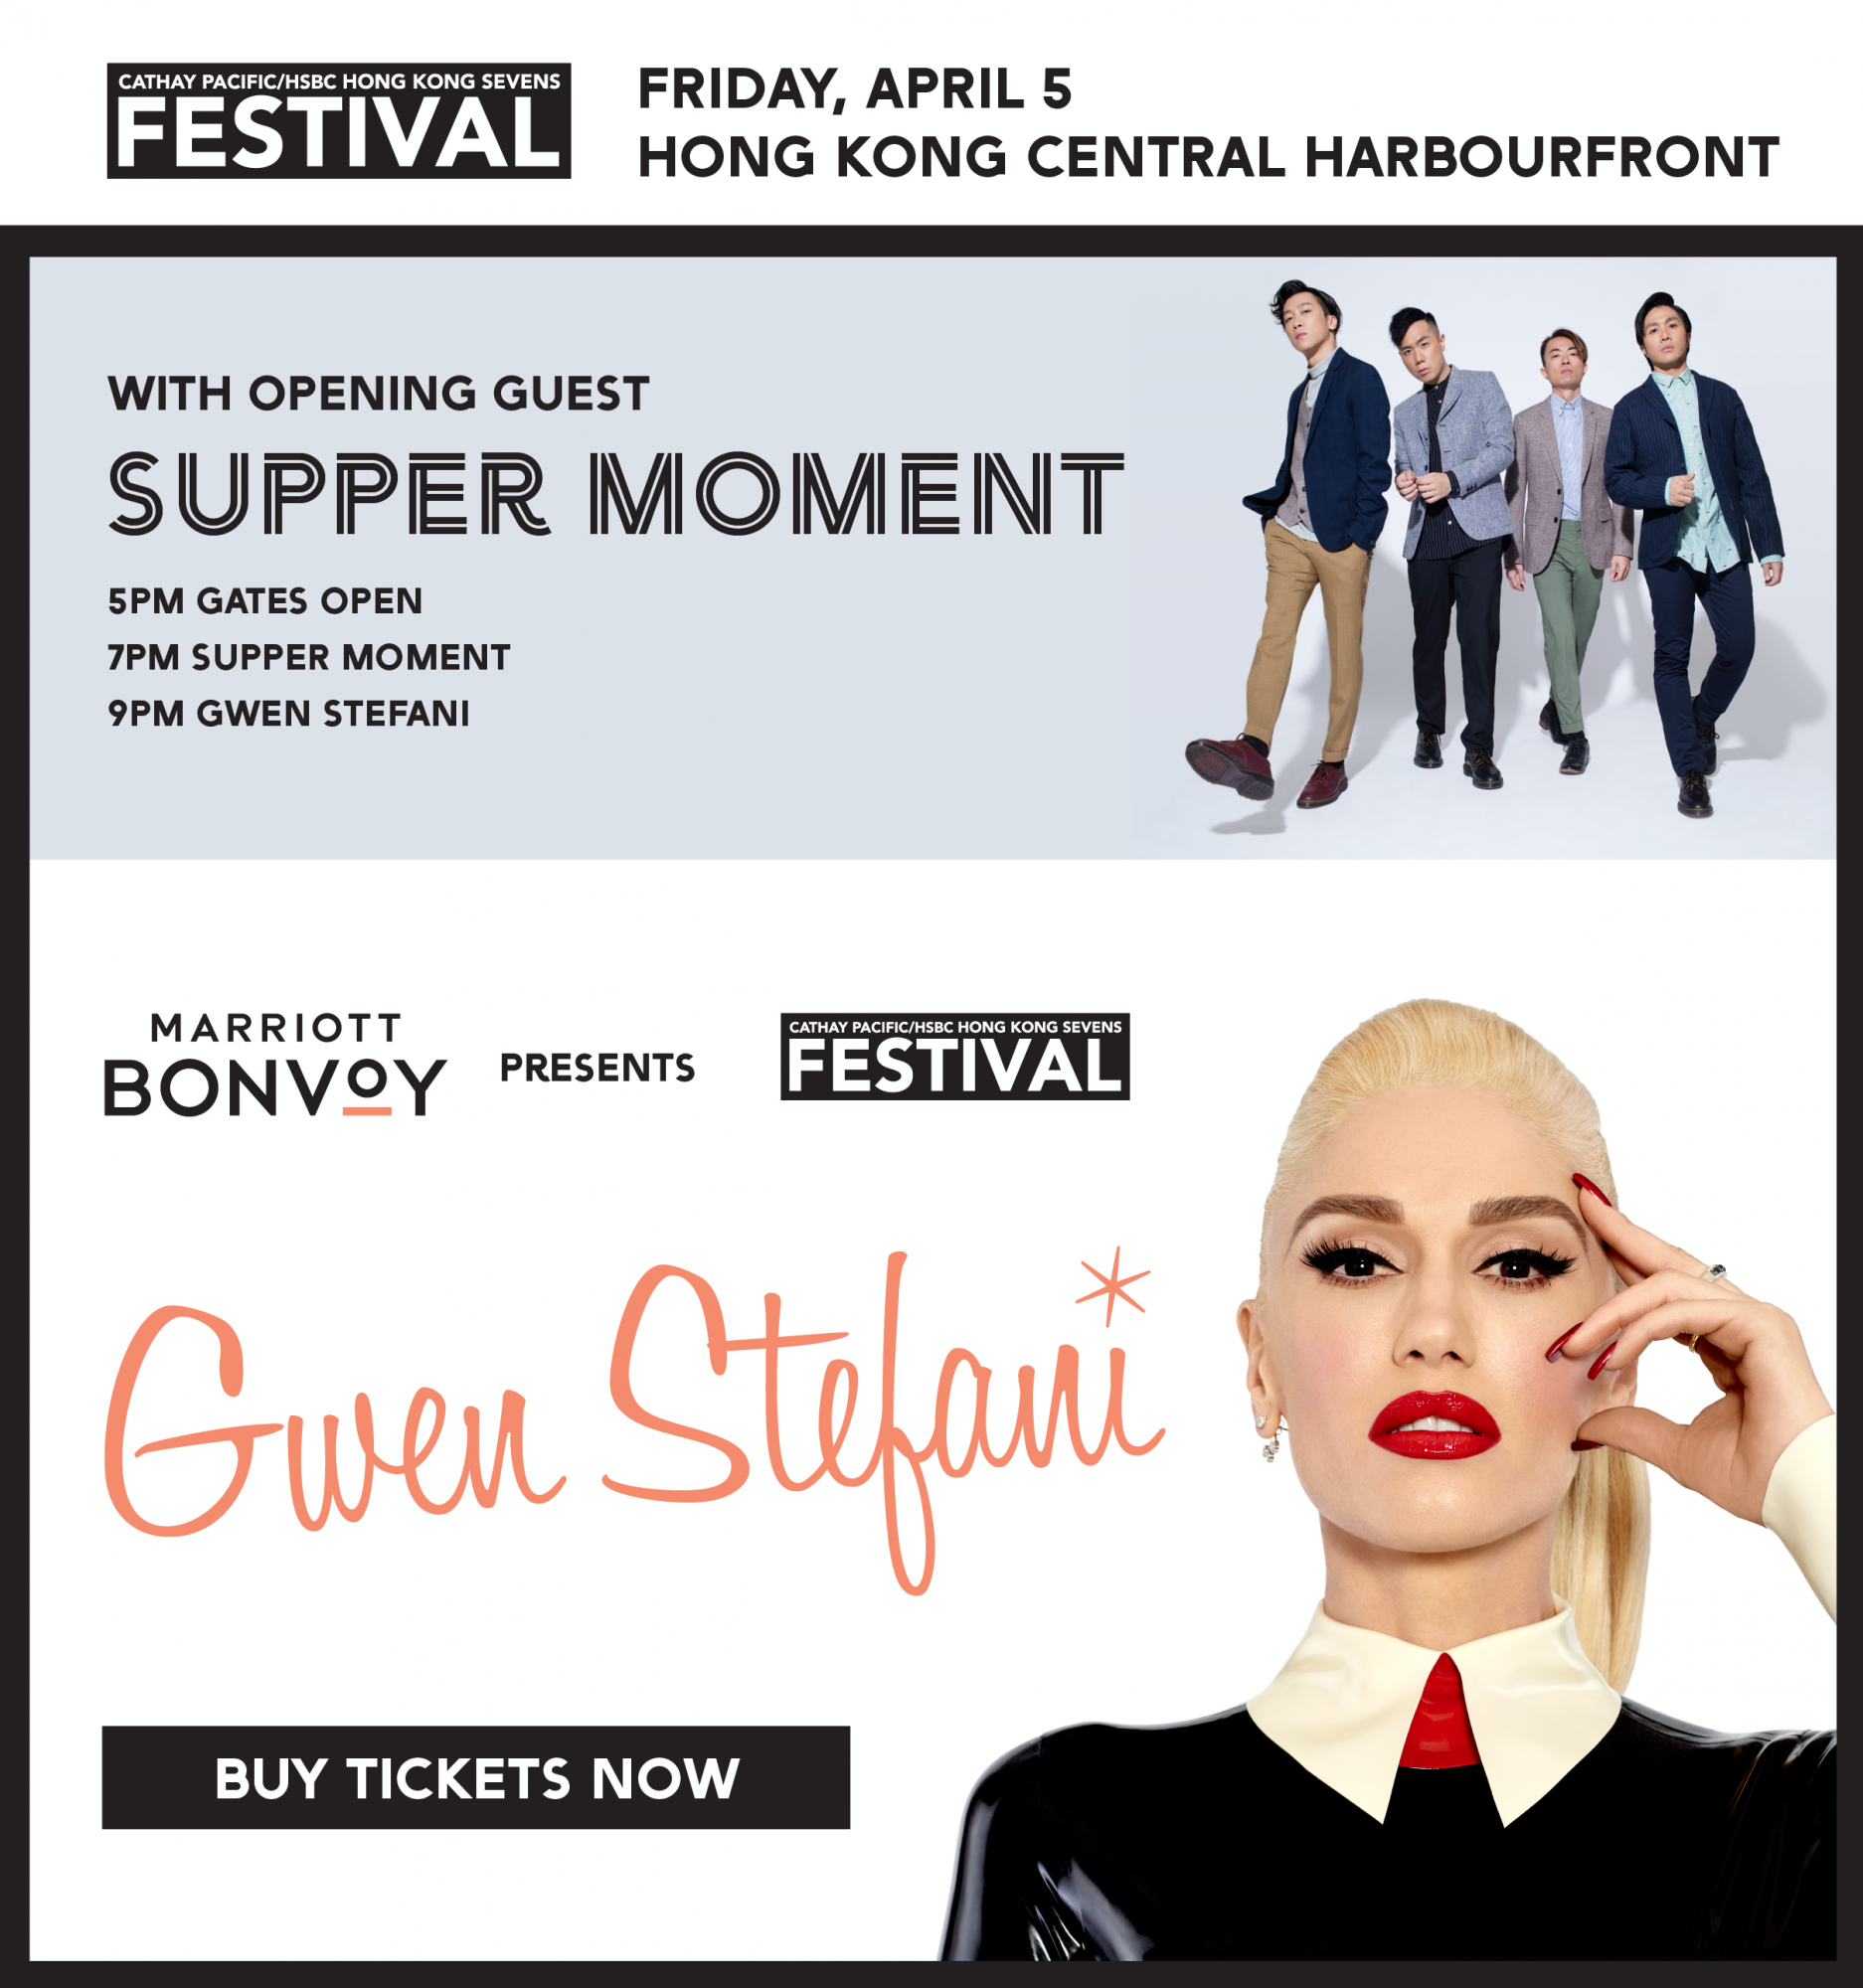 Cathay Pacific/HSBC Hong Kong Sevens Festival | Gwen Stefani | Presented by Marriott Bonvoy